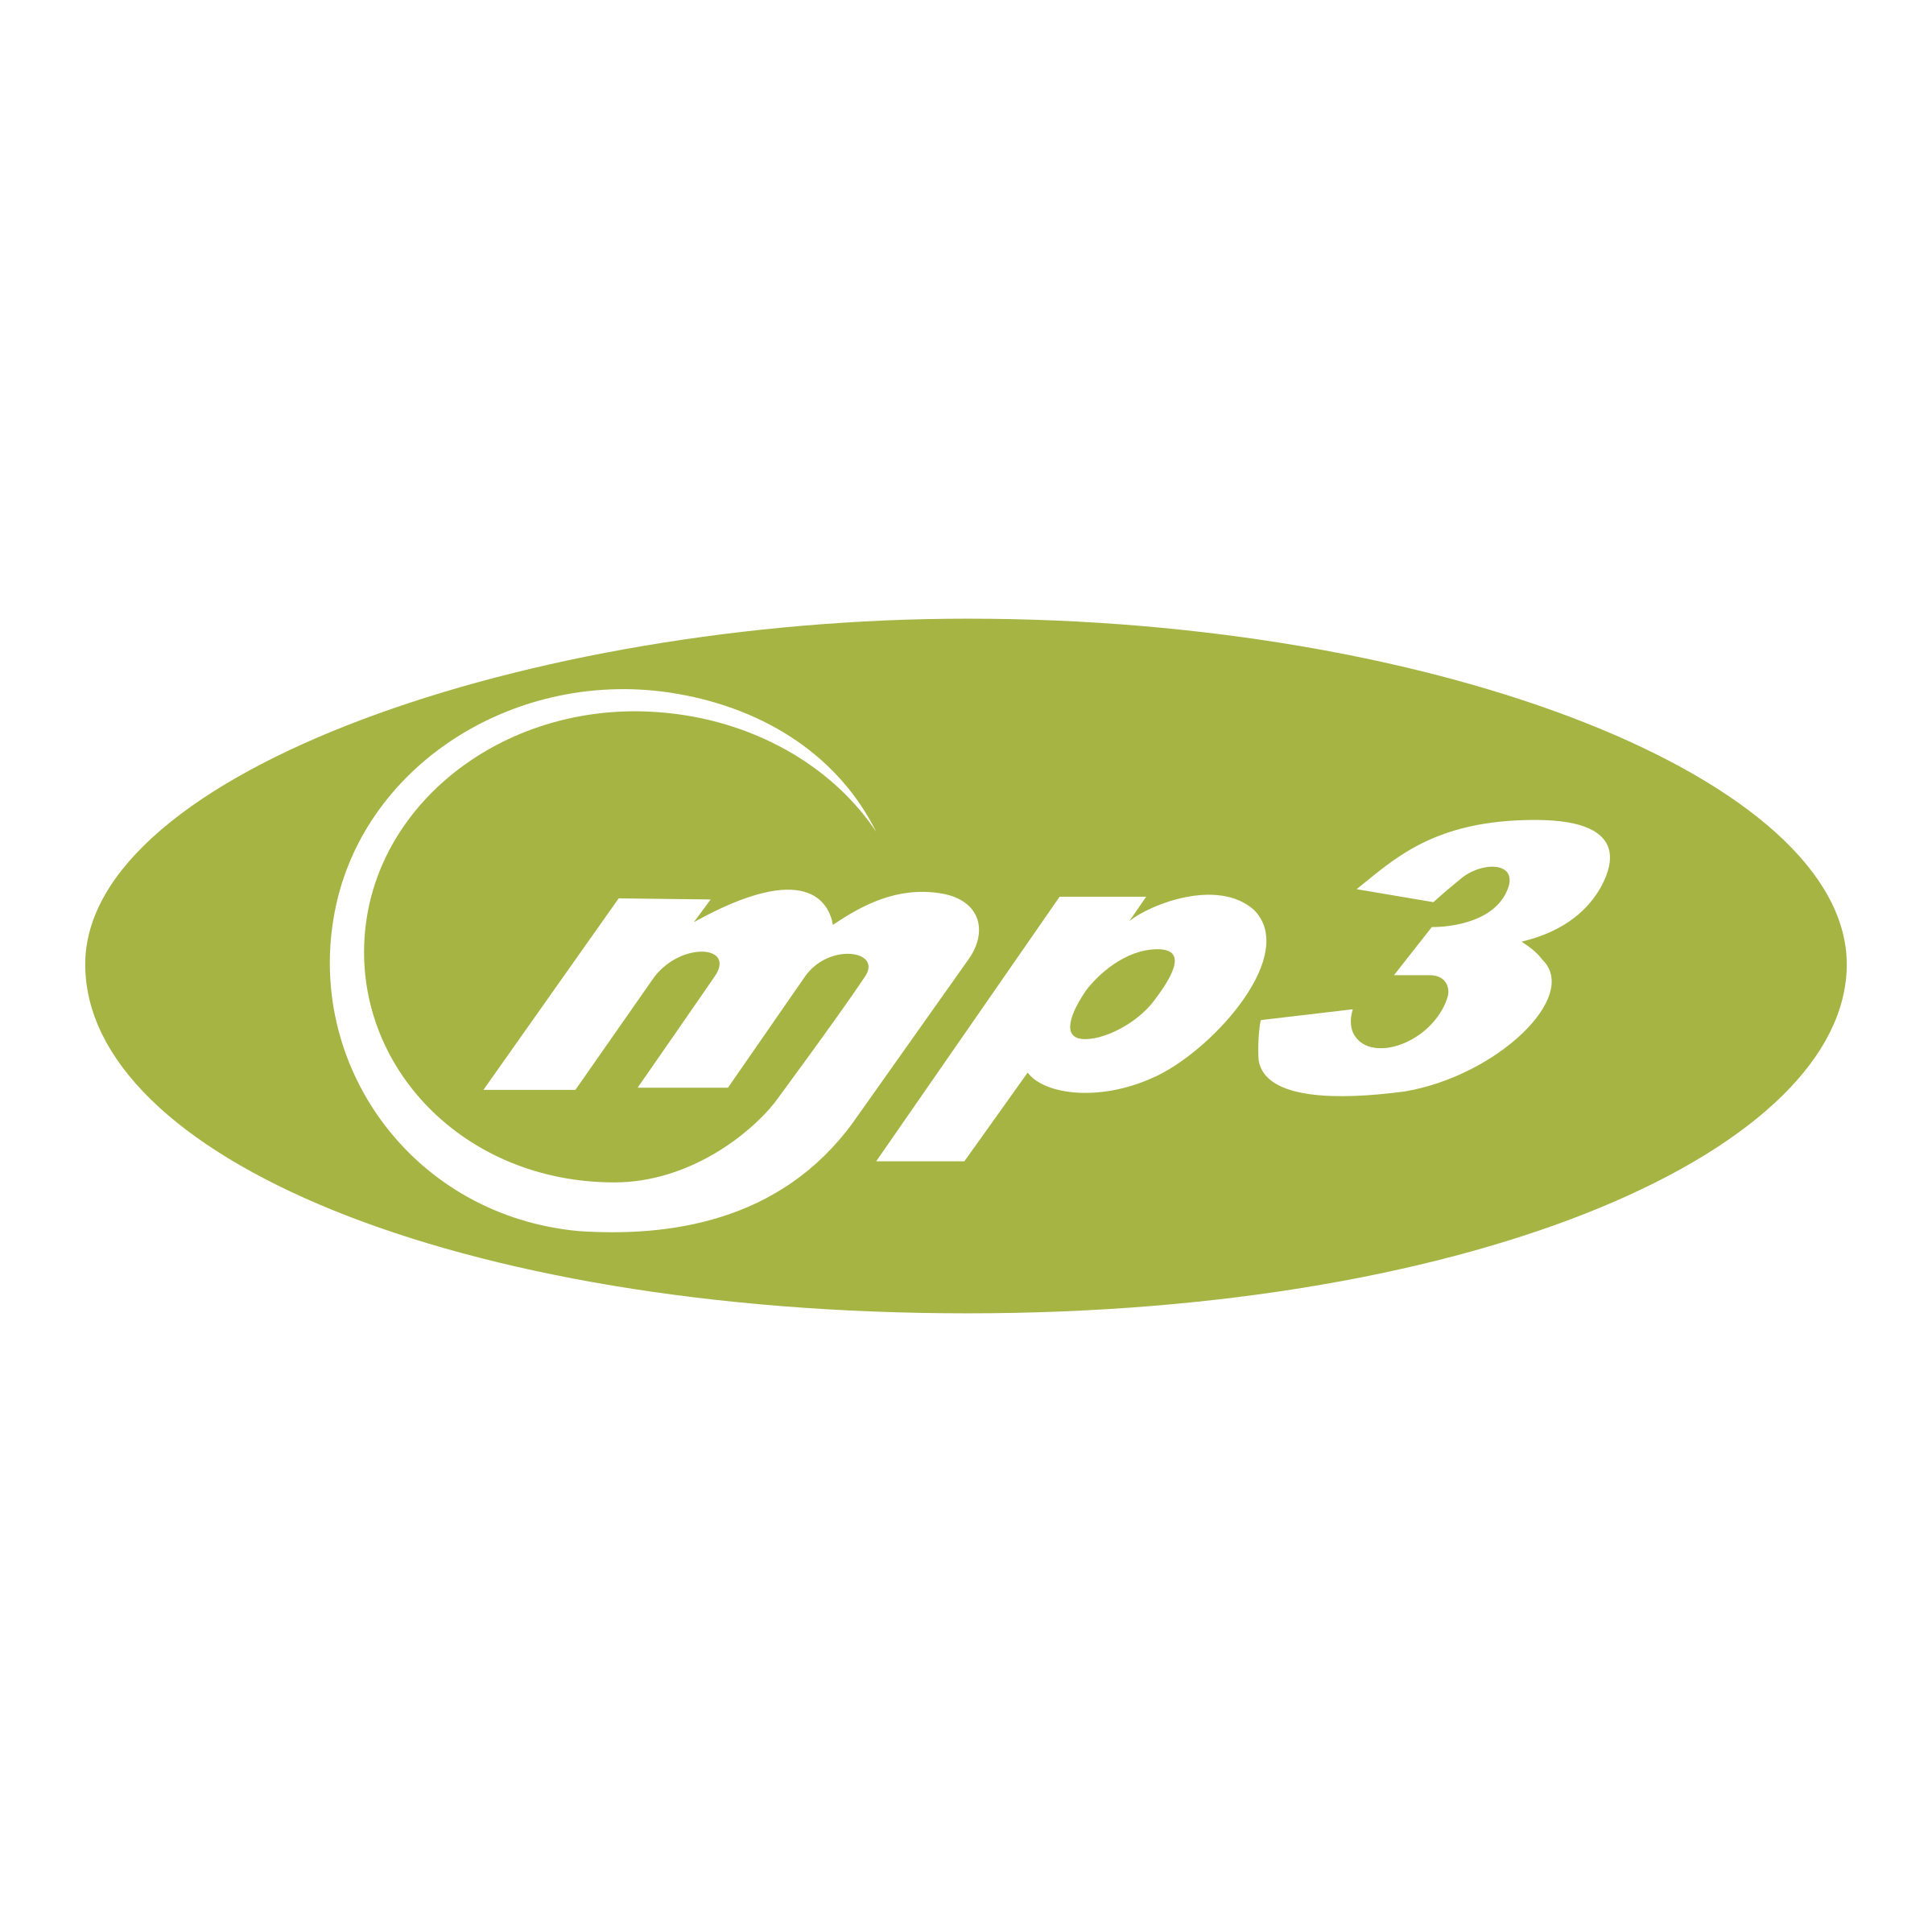 MP3 Logo - MP3 Logo PNG Transparent & SVG Vector - Freebie Supply